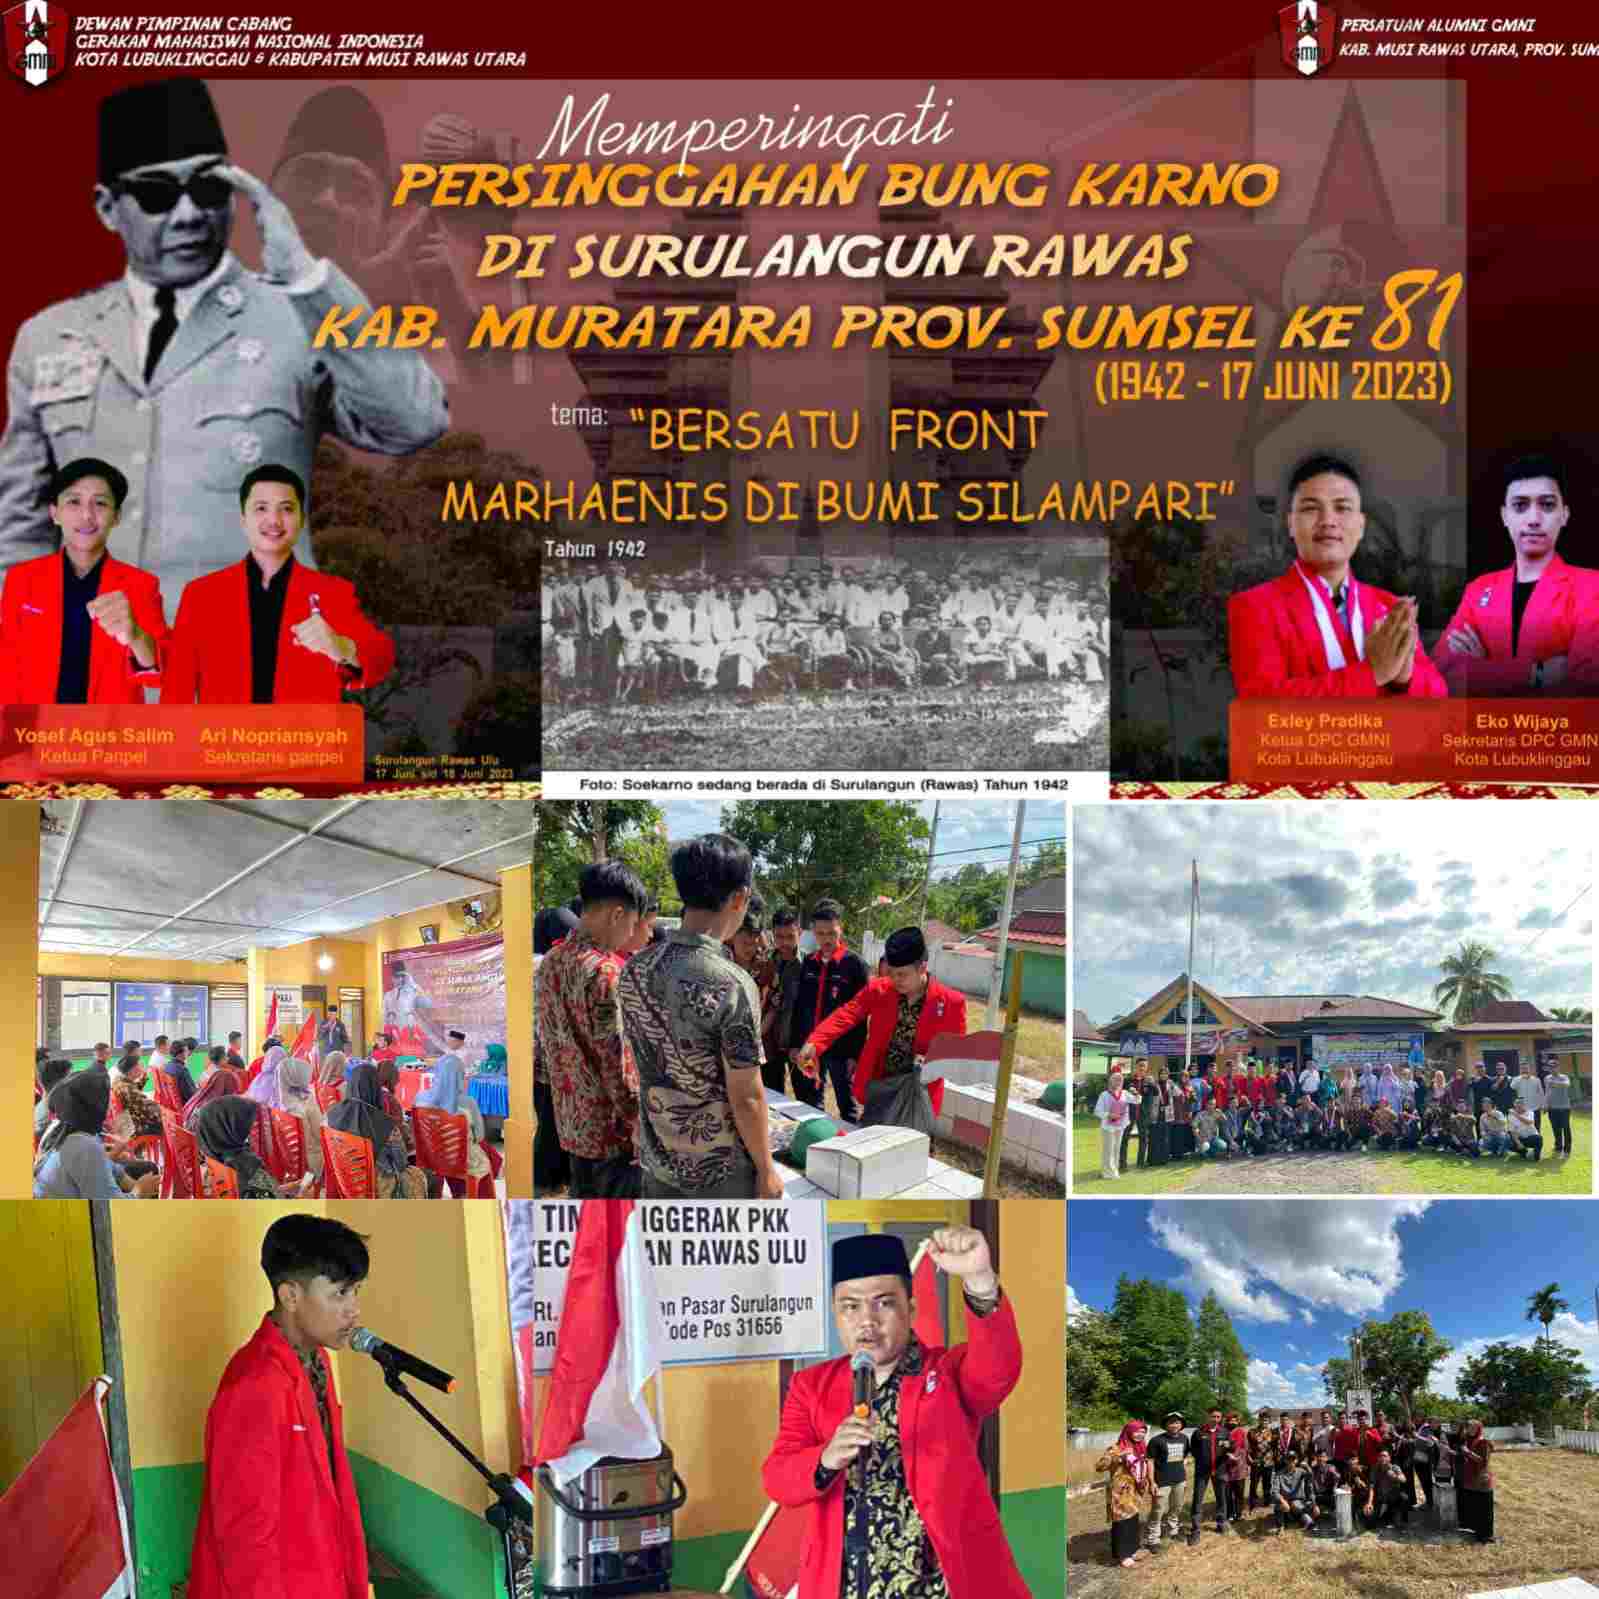 GMNI Peringati Persinggahan Bung Karno di Surulangun Rawas Muratara